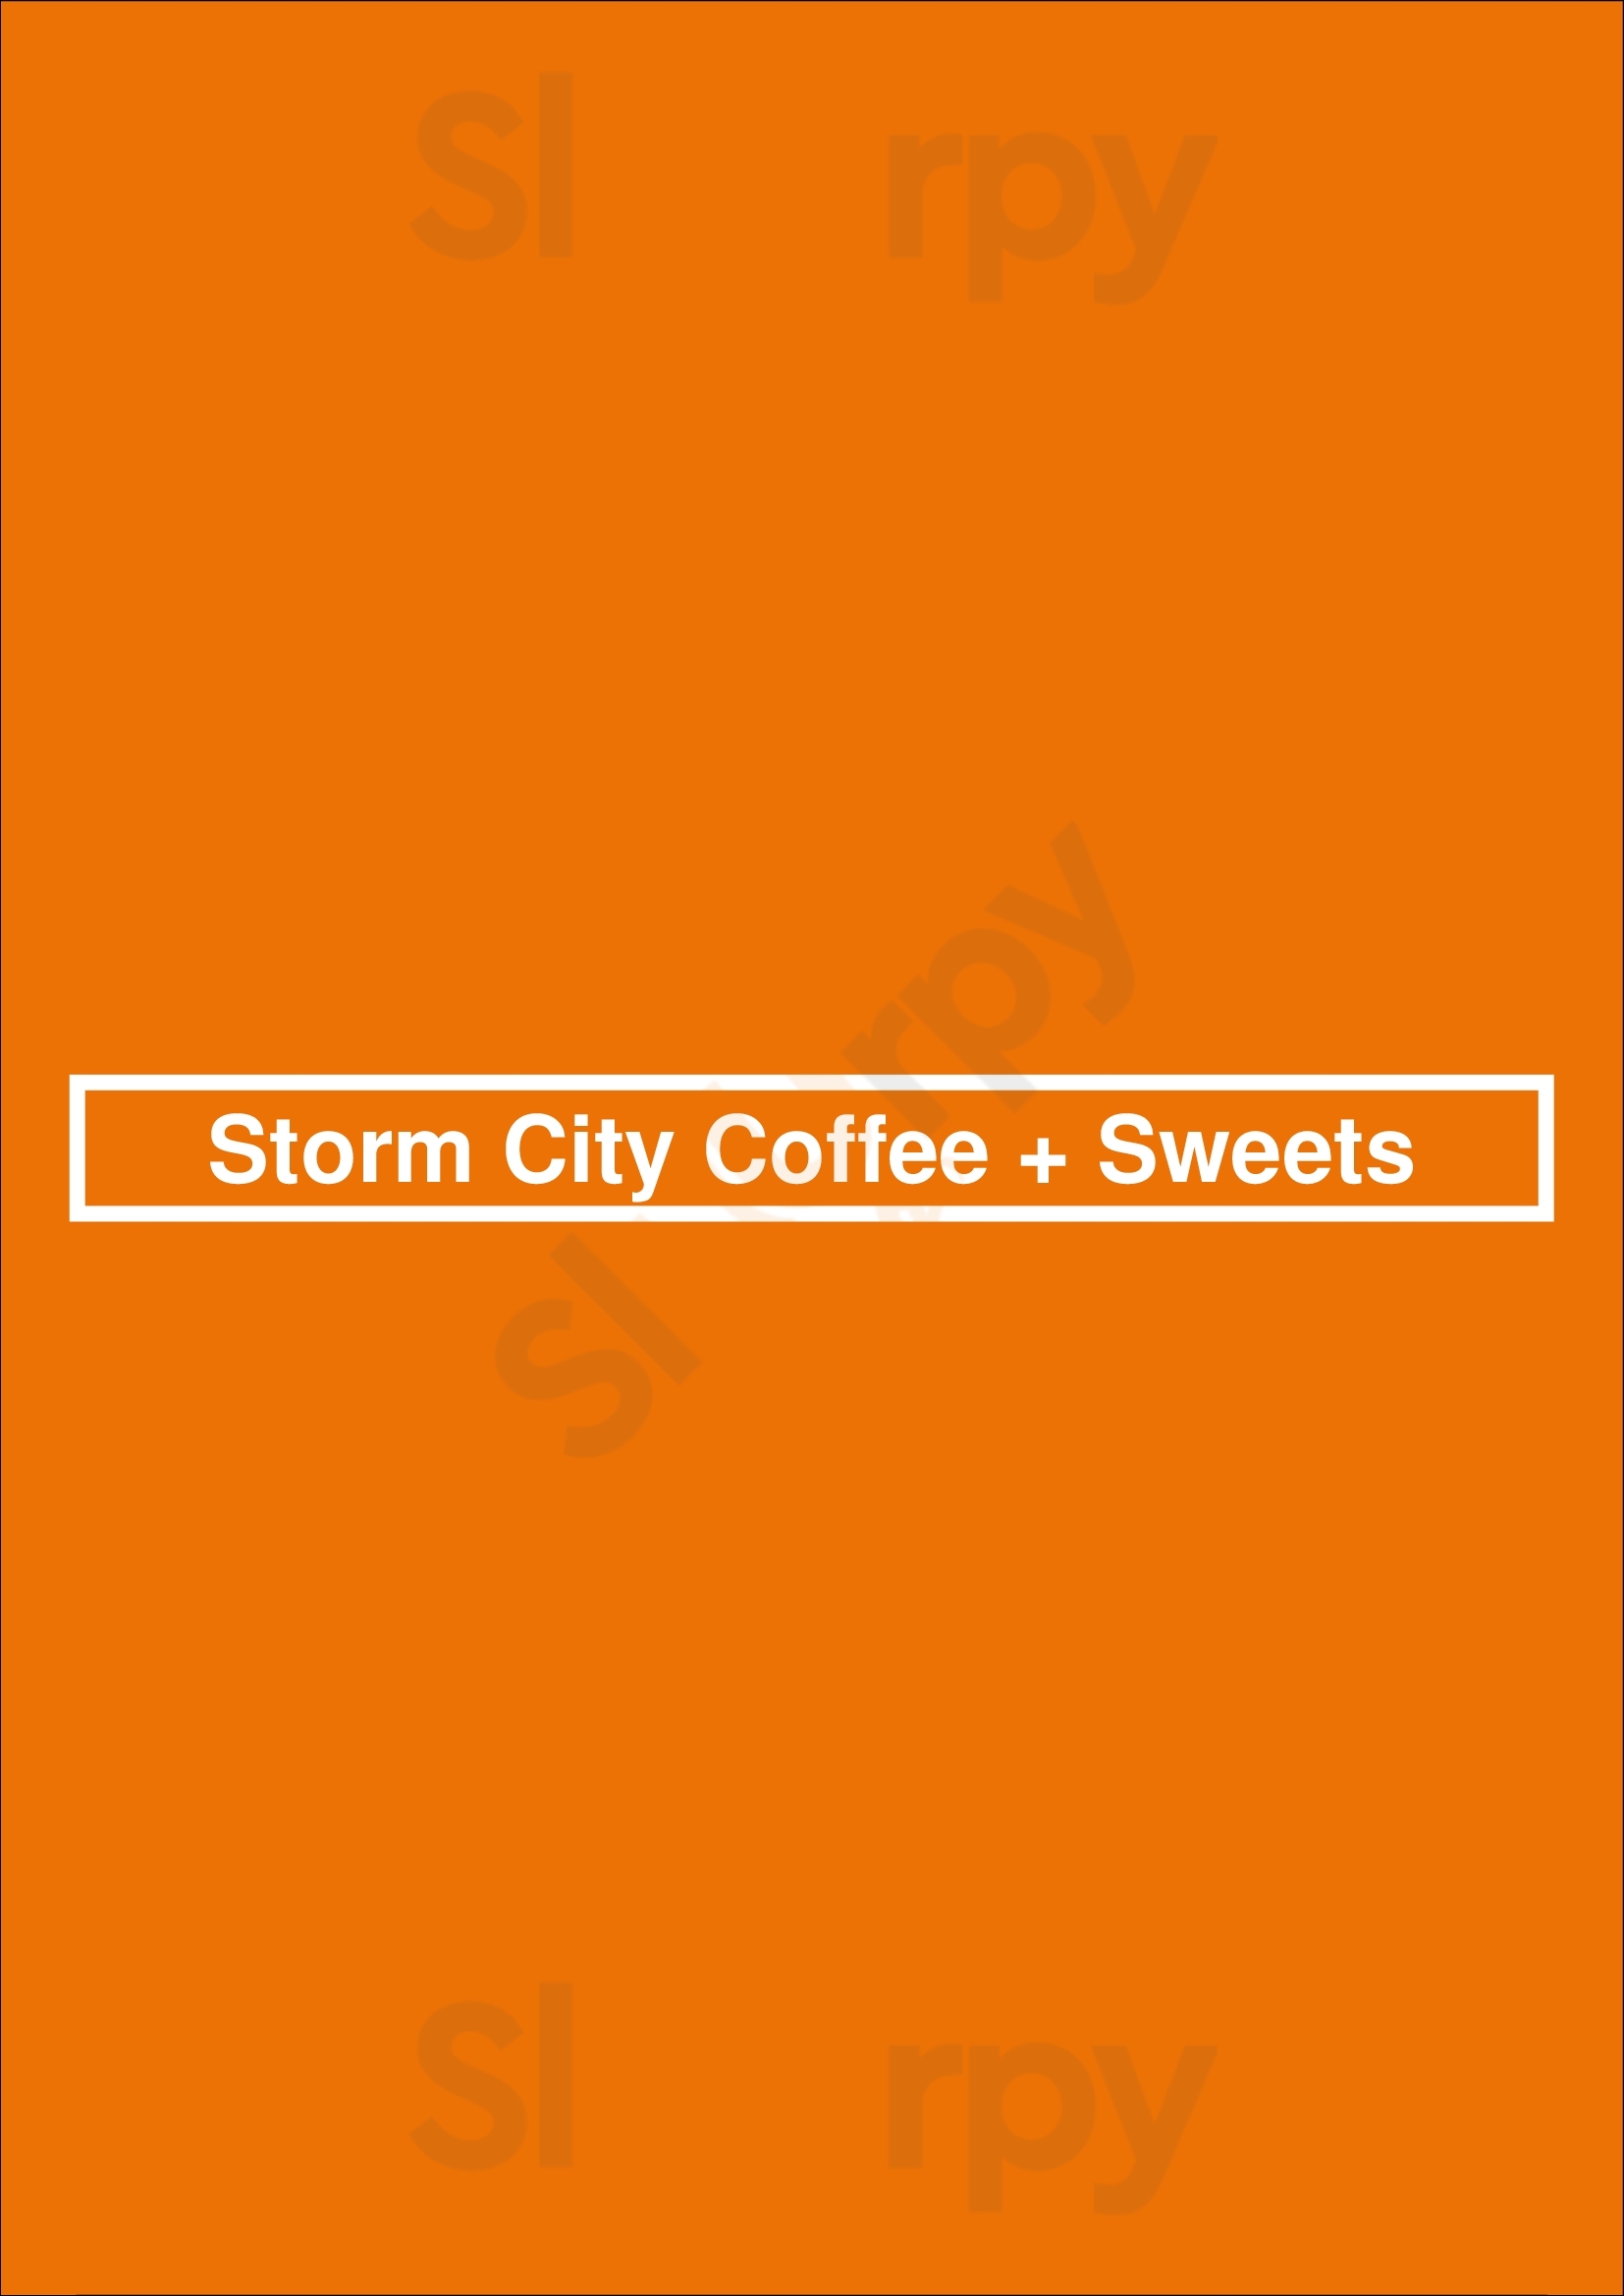 Storm City Coffee + Sweets Vancouver Menu - 1